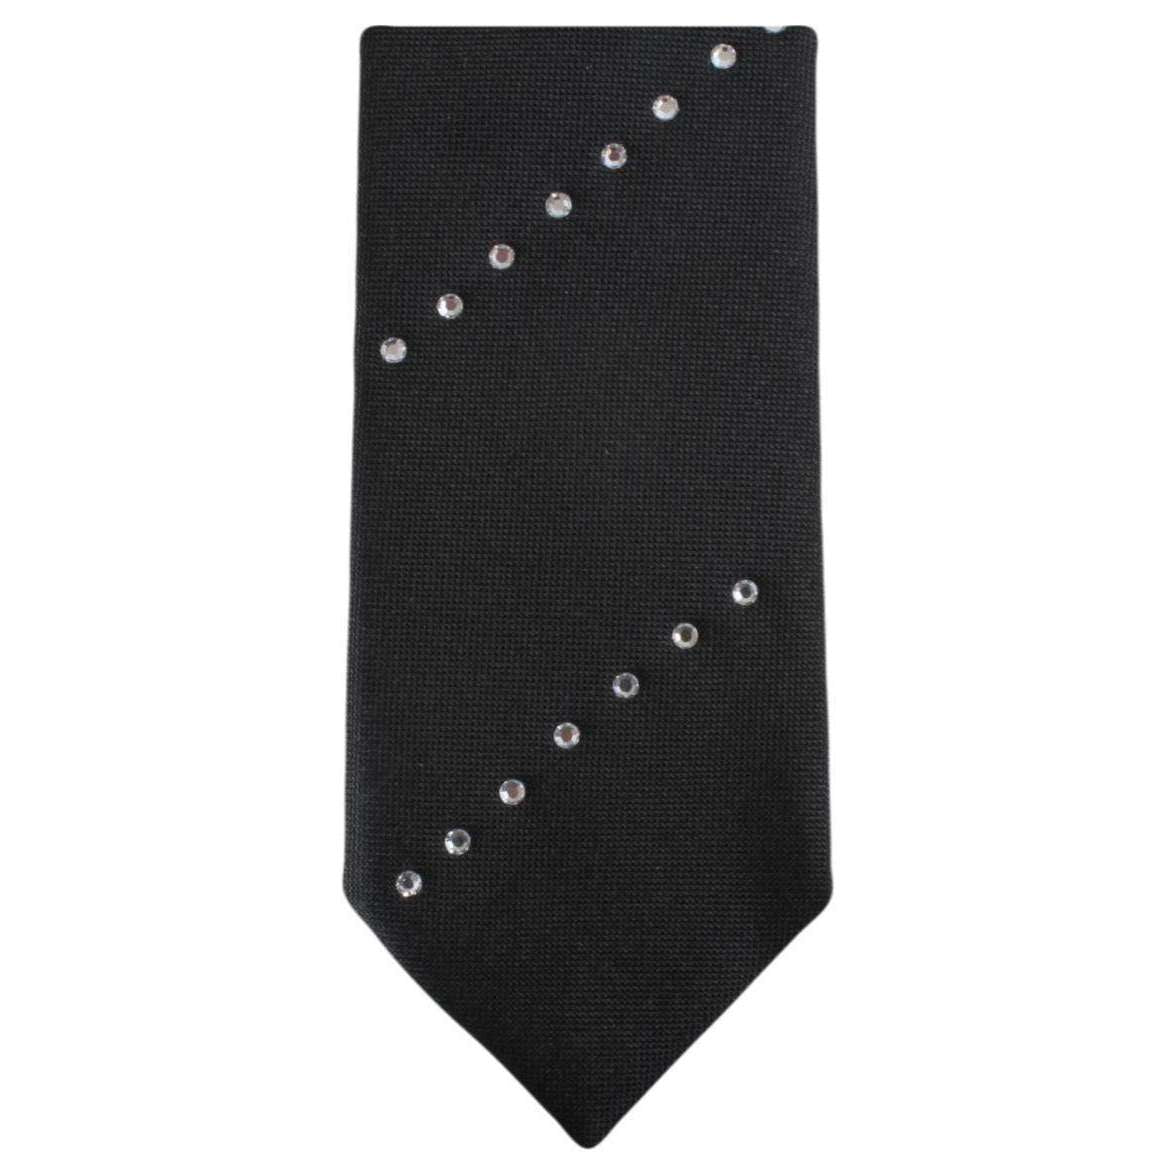 Knightsbridge Neckwear Diagonal Diamante Skinny Tie - Black/Silver